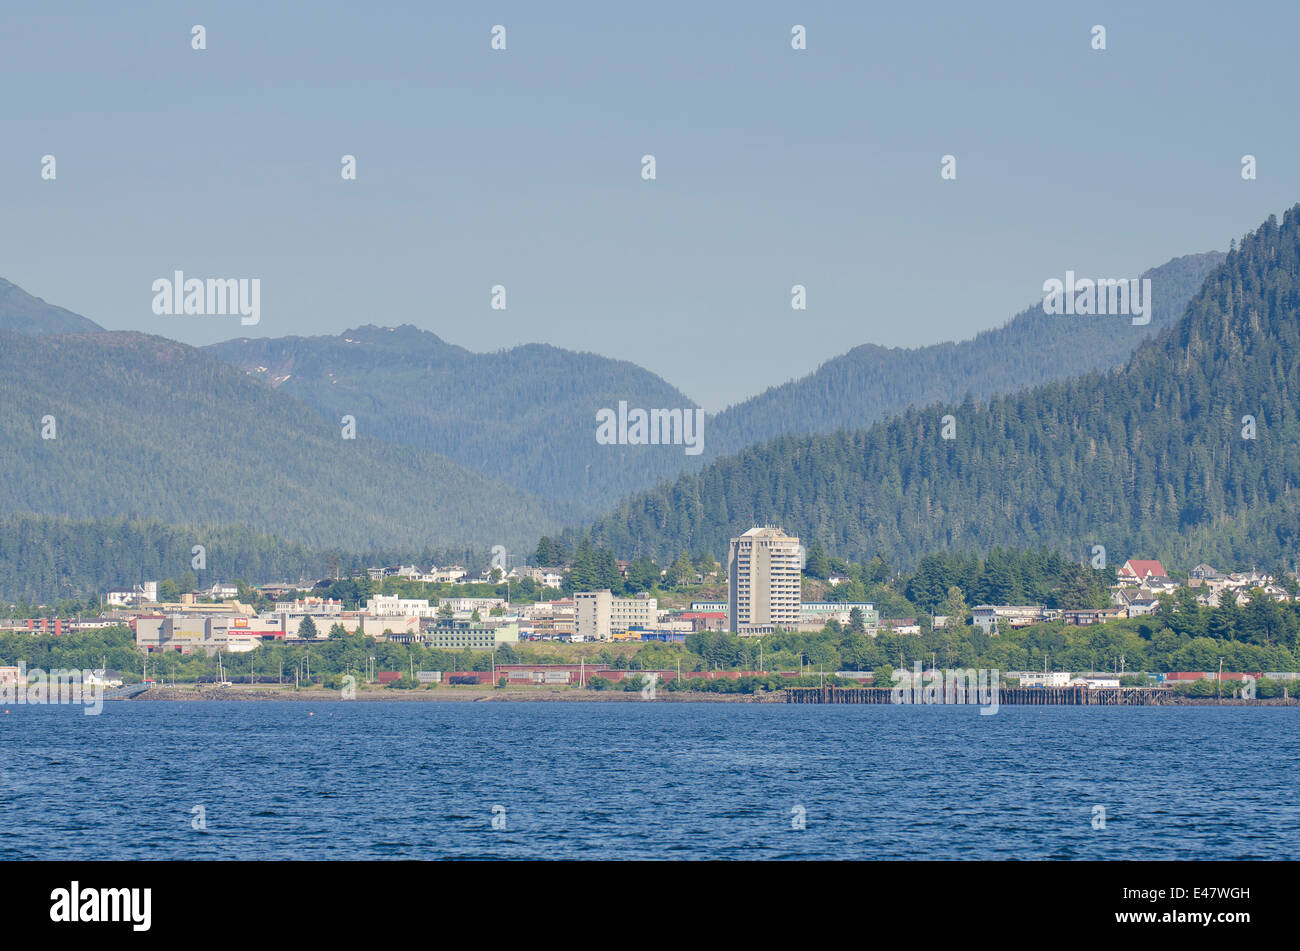 Downtown skyline cityscape Prince Rupert, British Columbia, Canada. Stock Photo